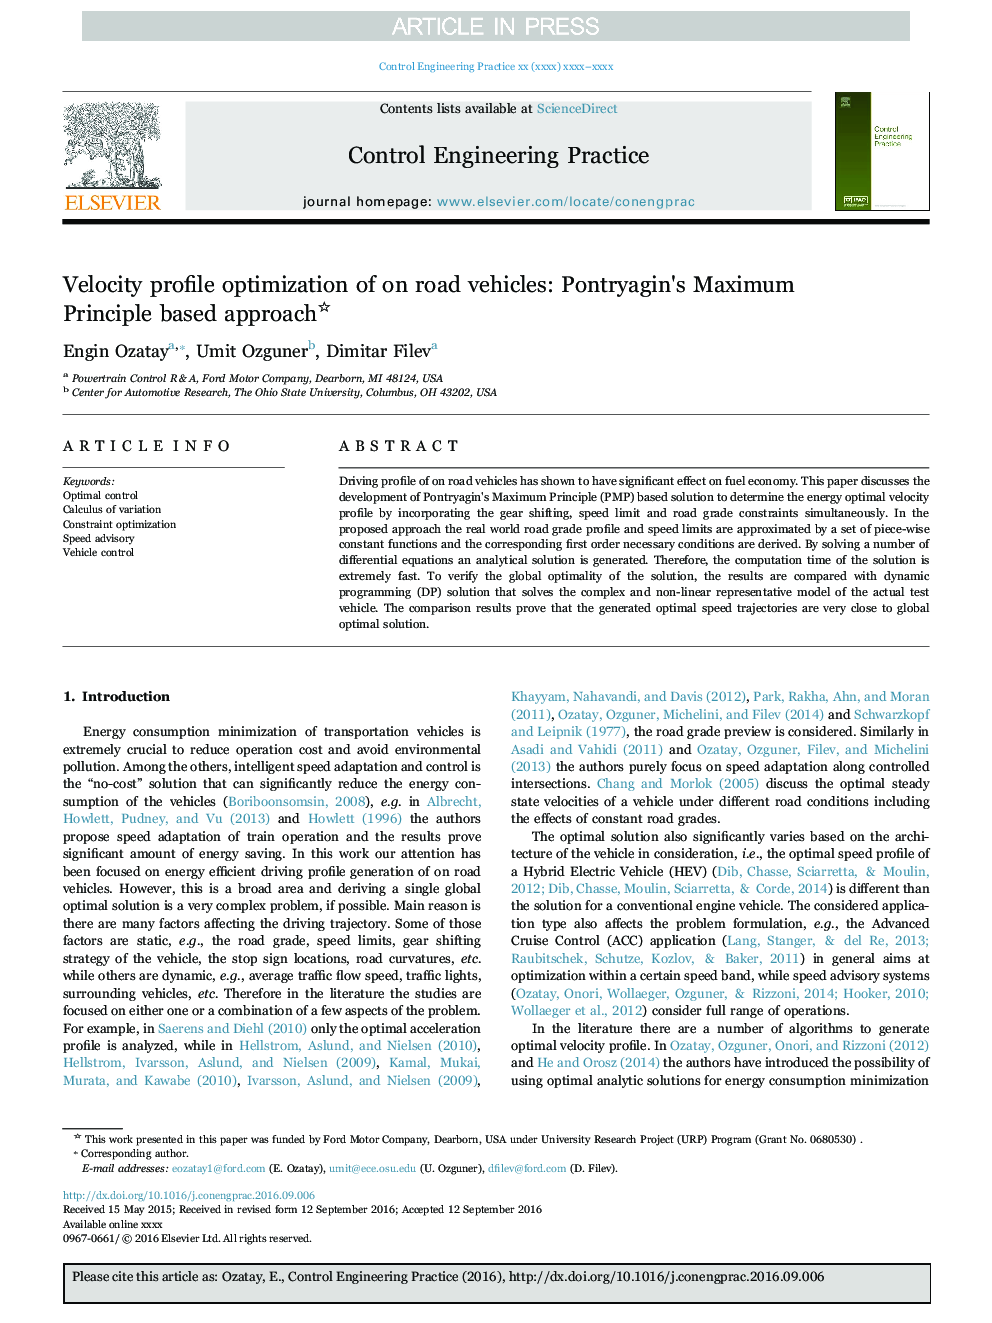 Velocity profile optimization of on road vehicles: Pontryagin's Maximum Principle based approach